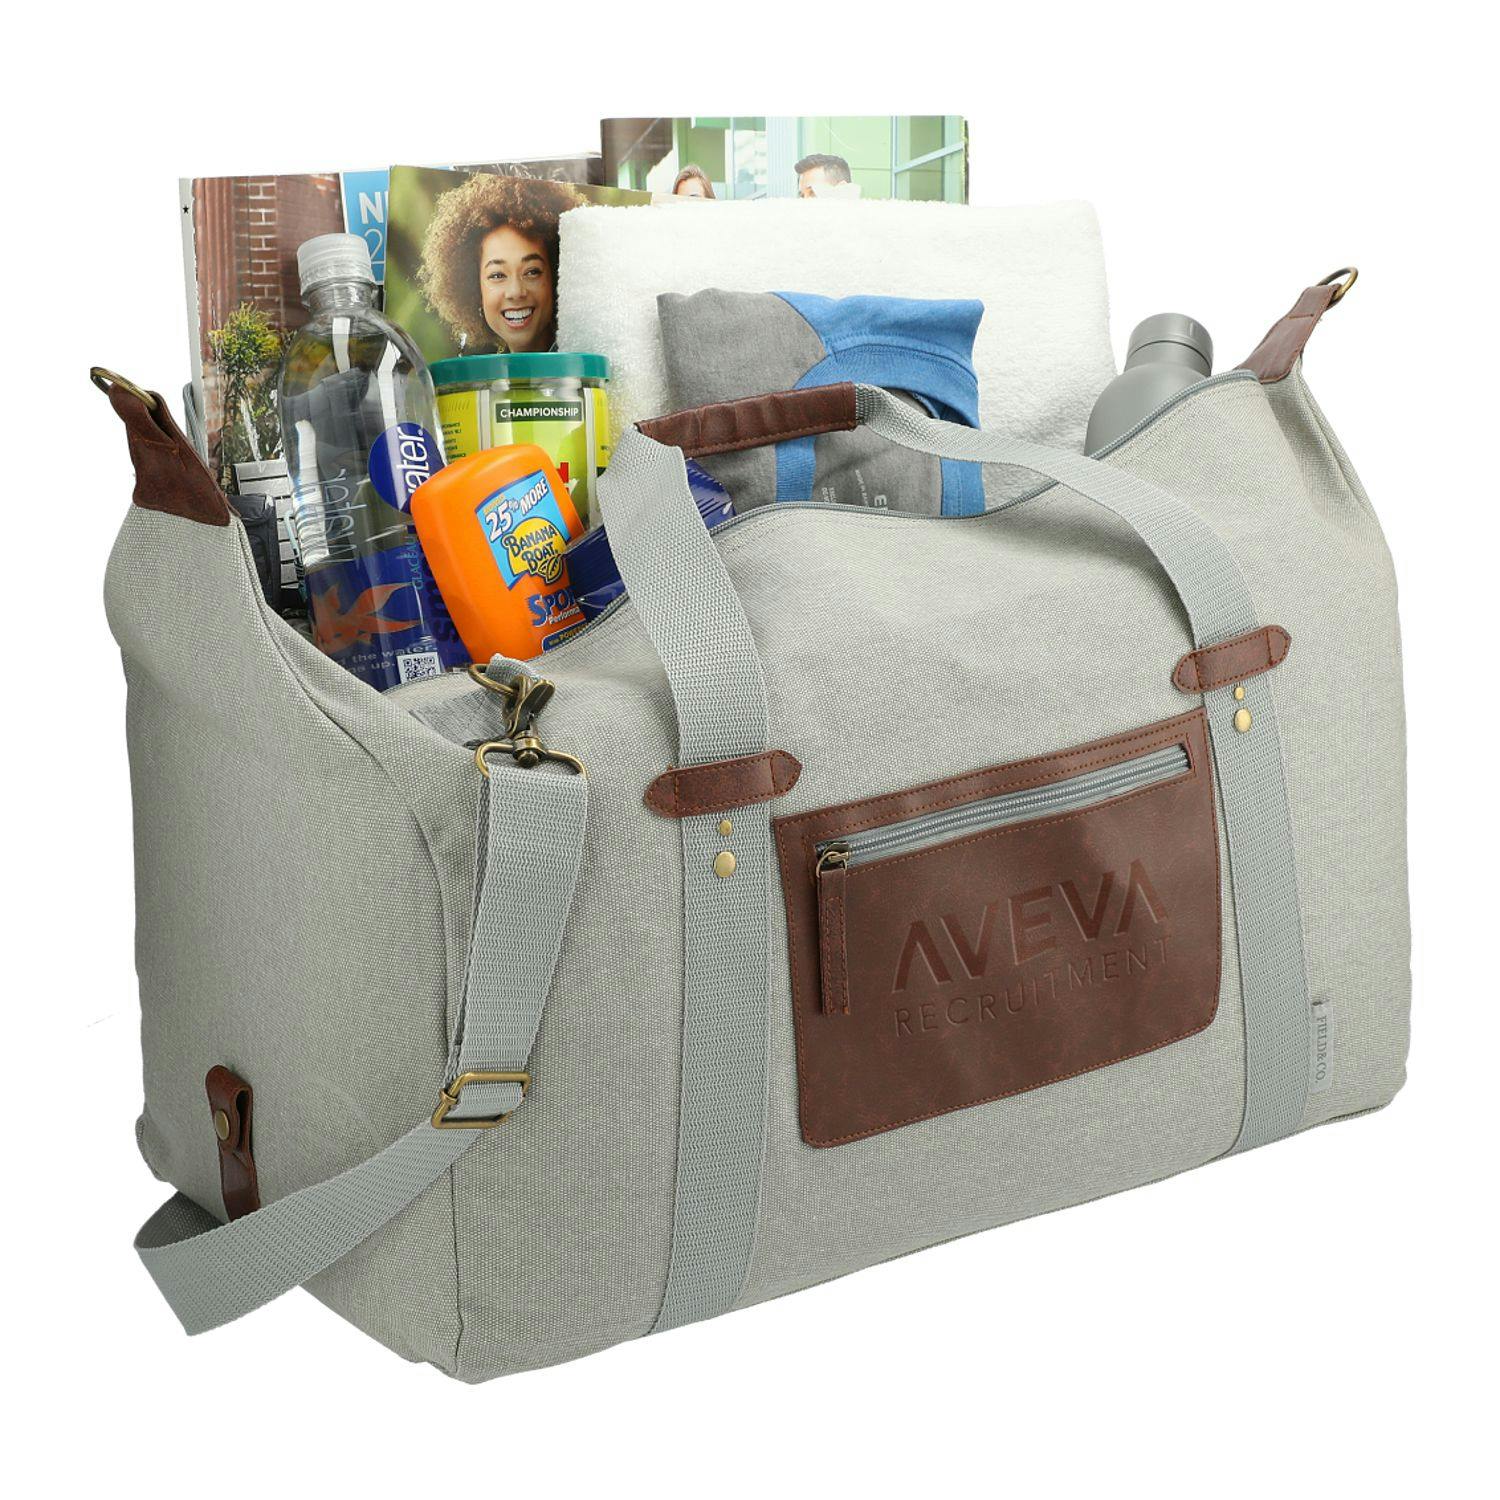 Field & Co.® Classic 20" Duffel Bag - additional Image 1